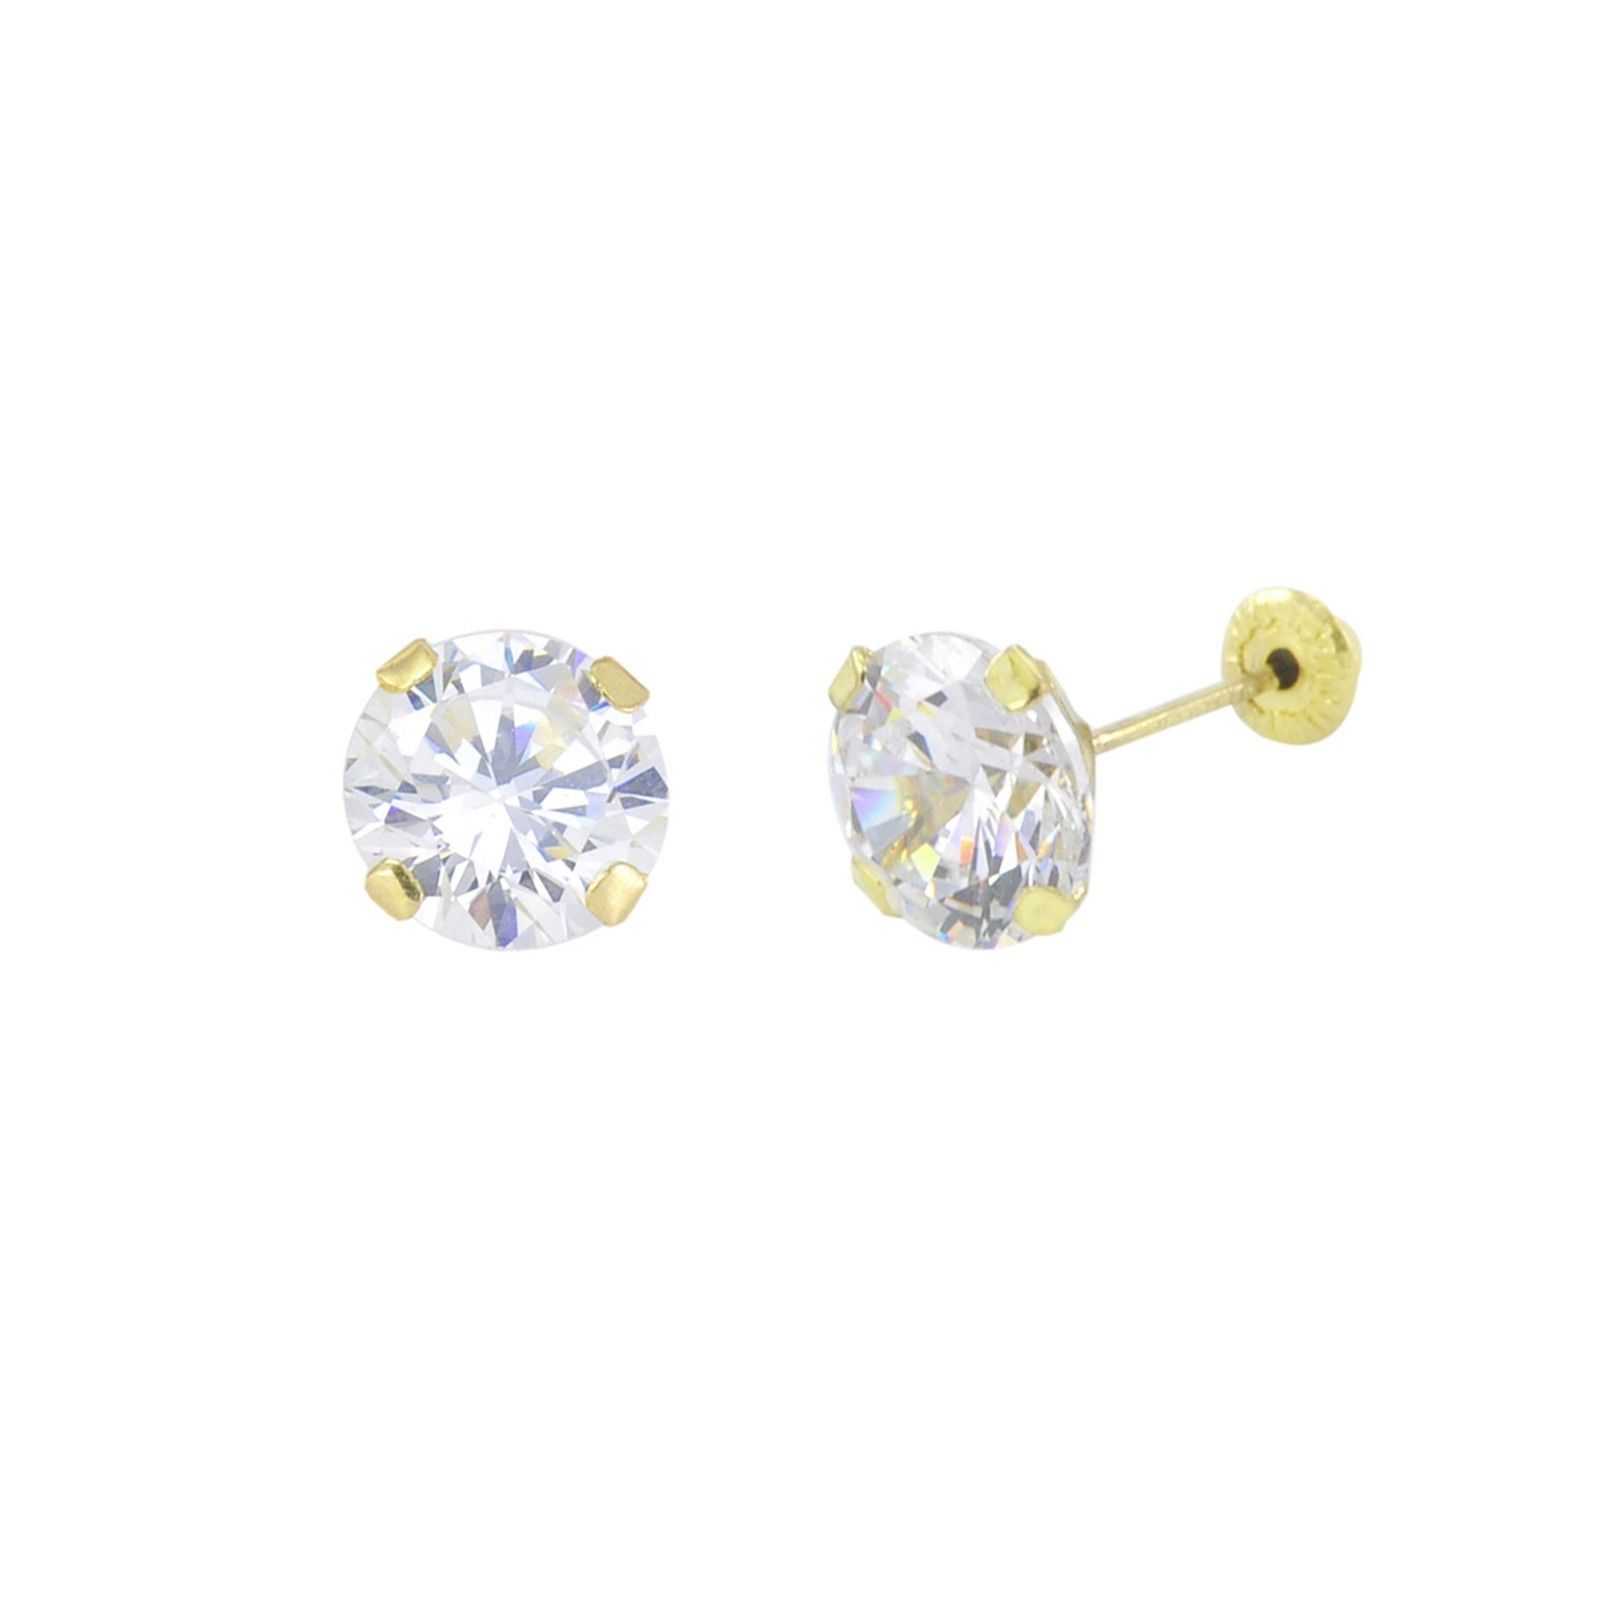 Handmade 10k Yellow Gold Round CZ Stud Earrings Screwbacks Prong Set 2mm-7mm - $16.99 - $26.99